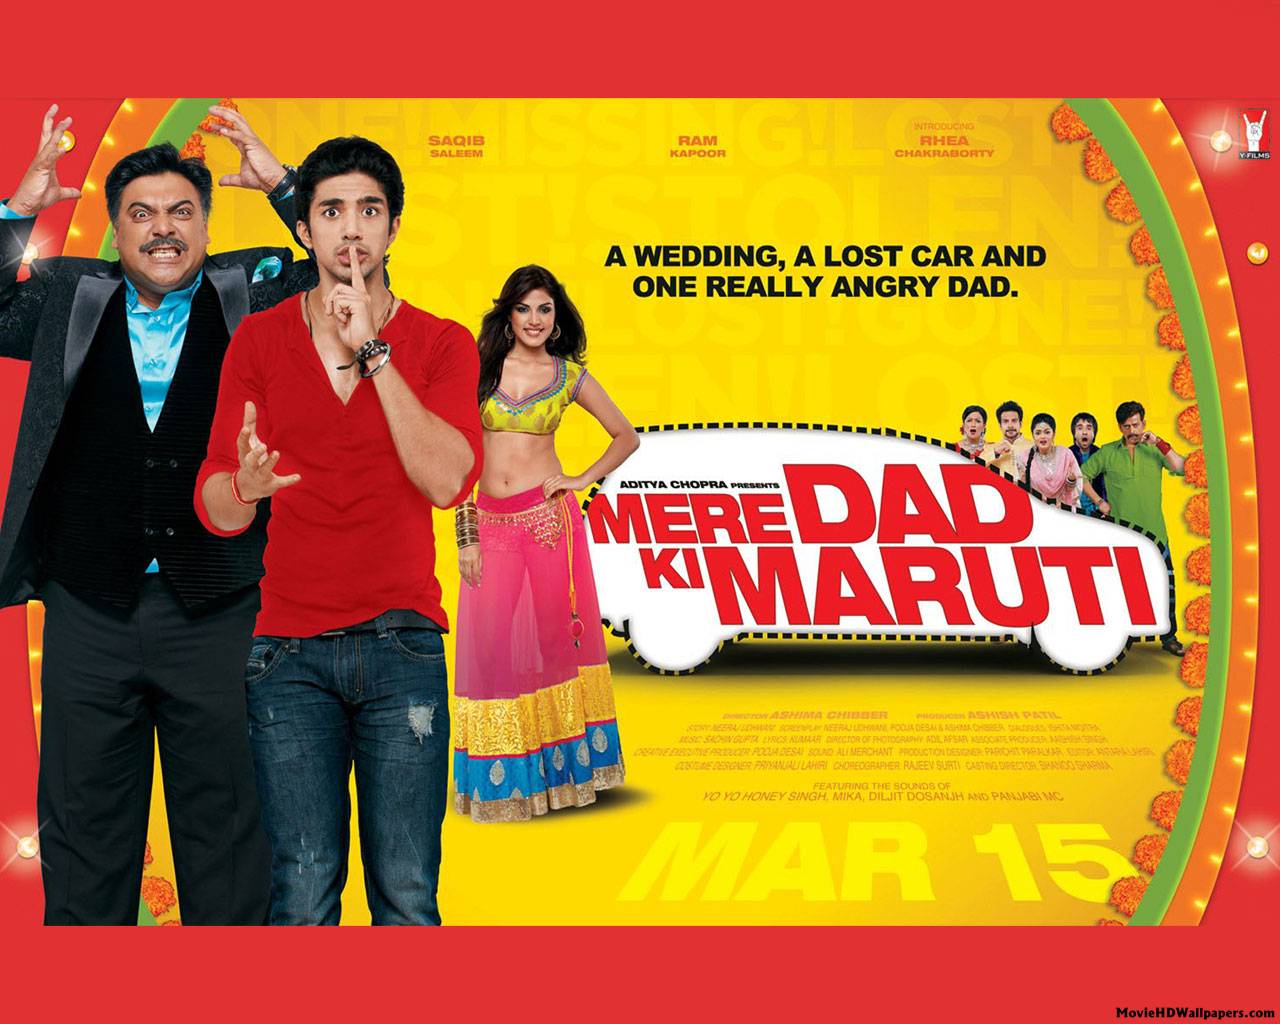 Mere Dad Ki Maruti (2013) HD Wallpapers